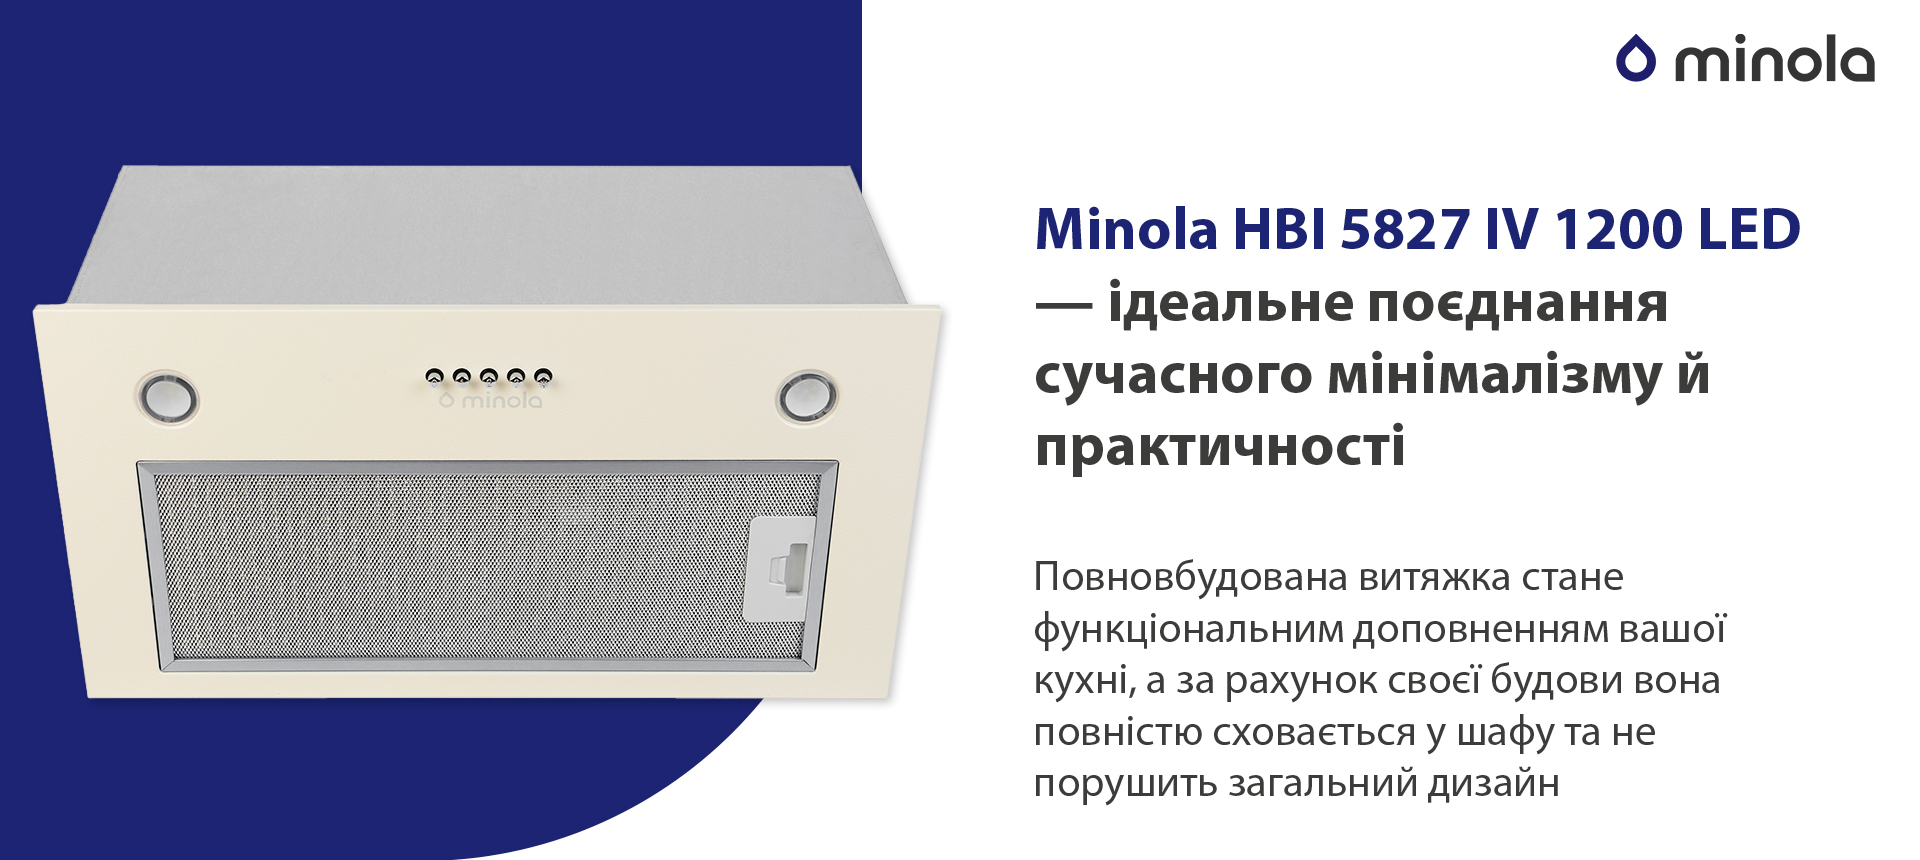 Minola HBI 5827 IV 1200 LED в магазине в Киеве - фото 10